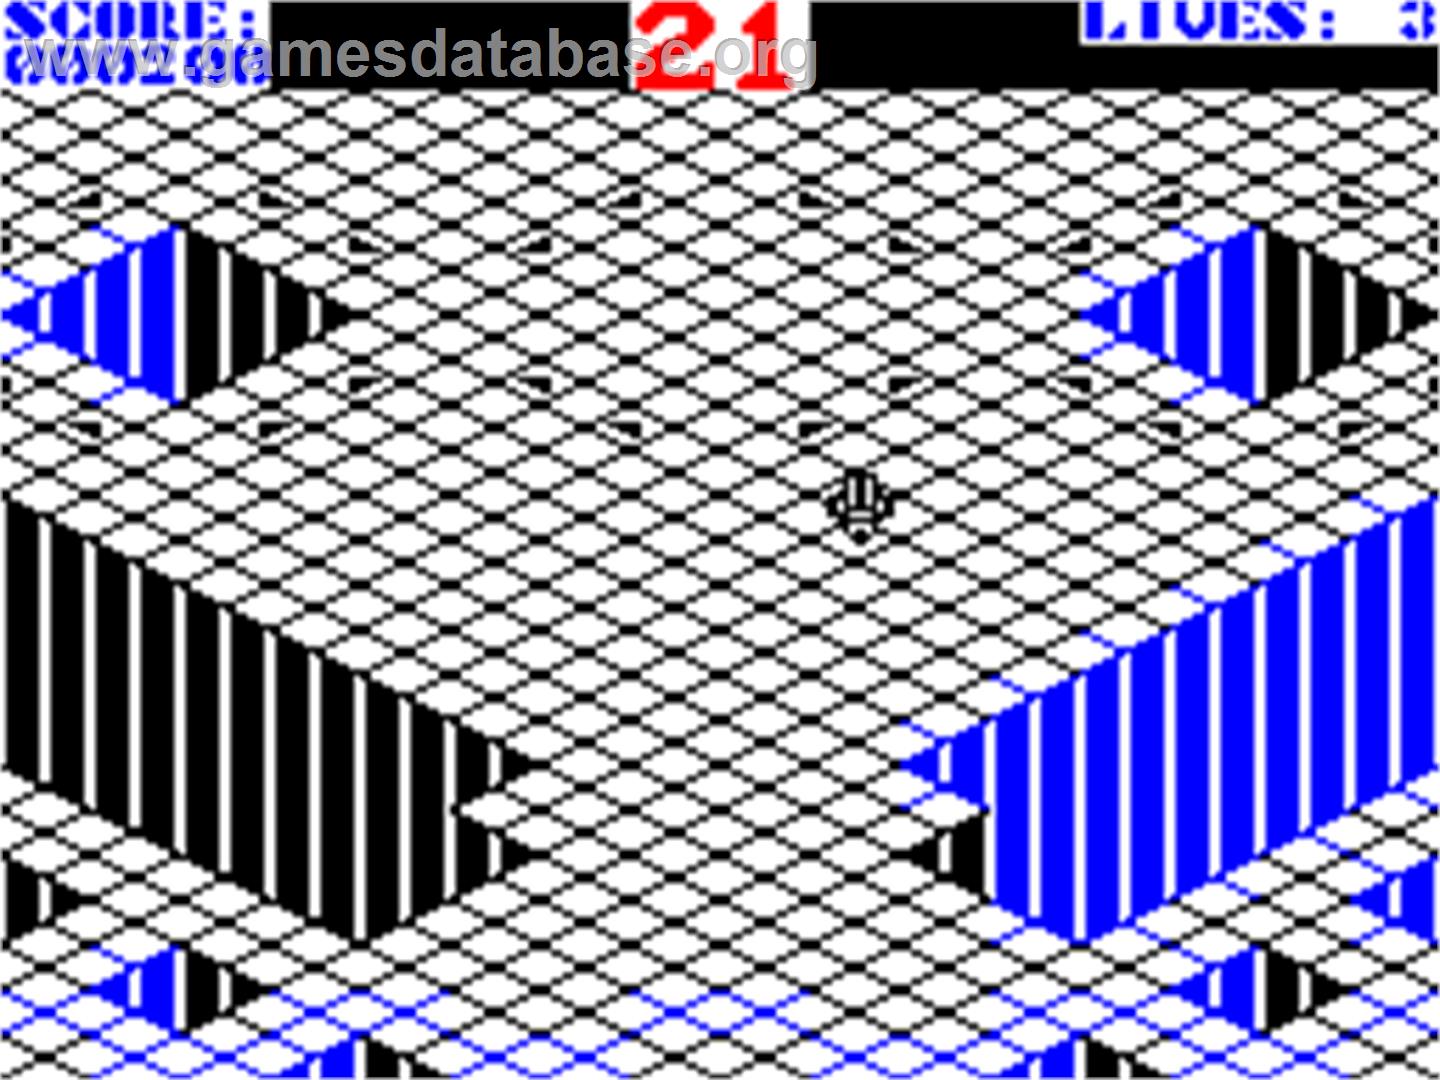 Gyroscope - Sinclair ZX Spectrum - Artwork - In Game